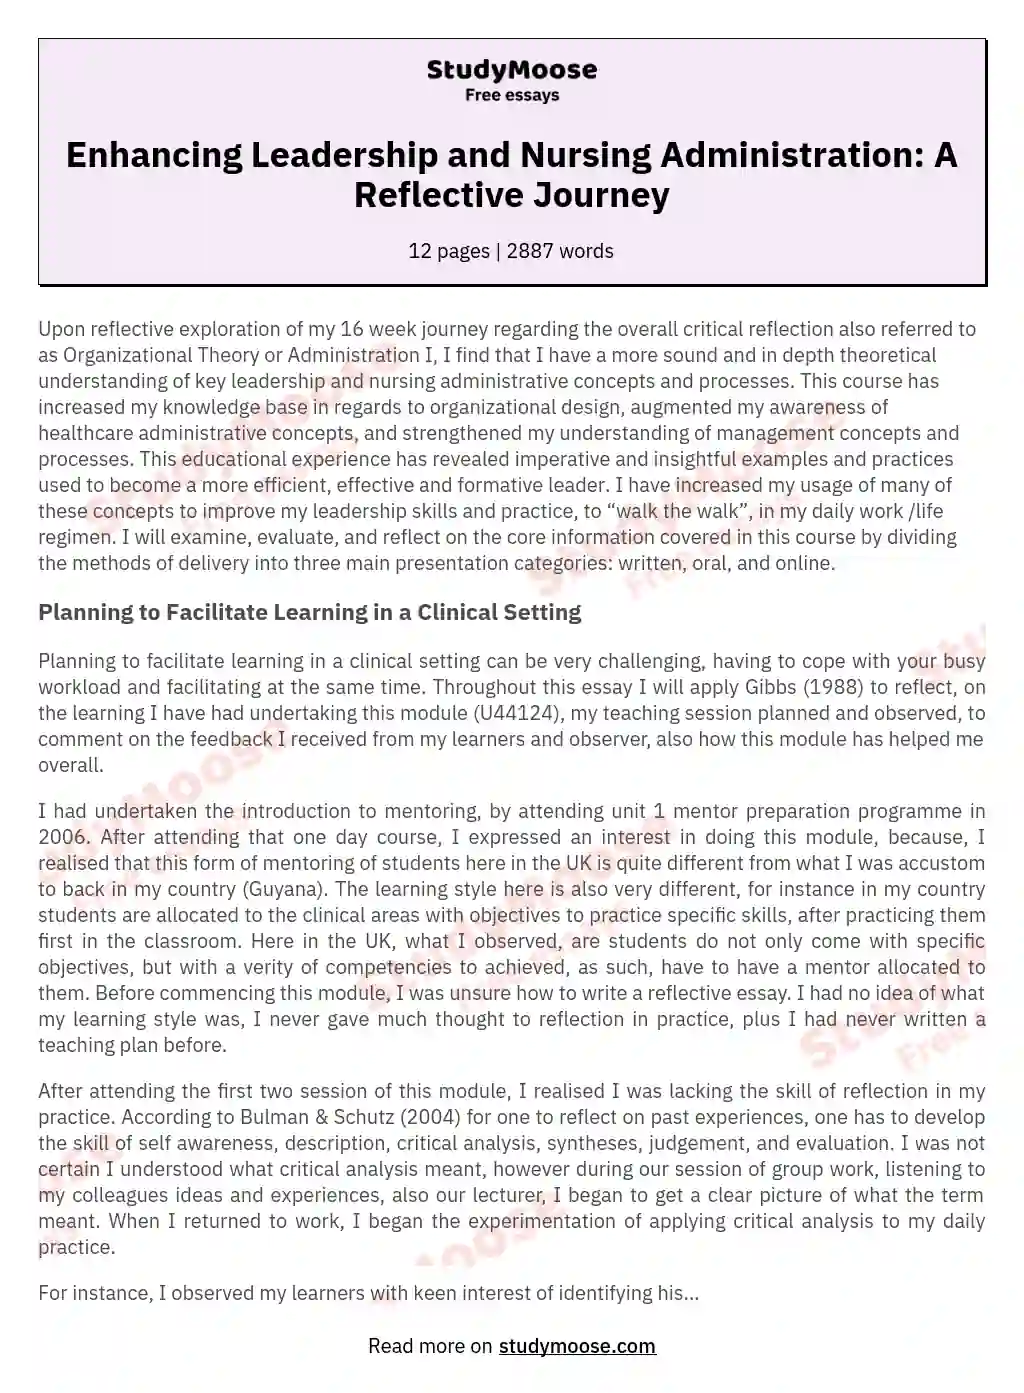 Enhancing Leadership and Nursing Administration: A Reflective Journey essay